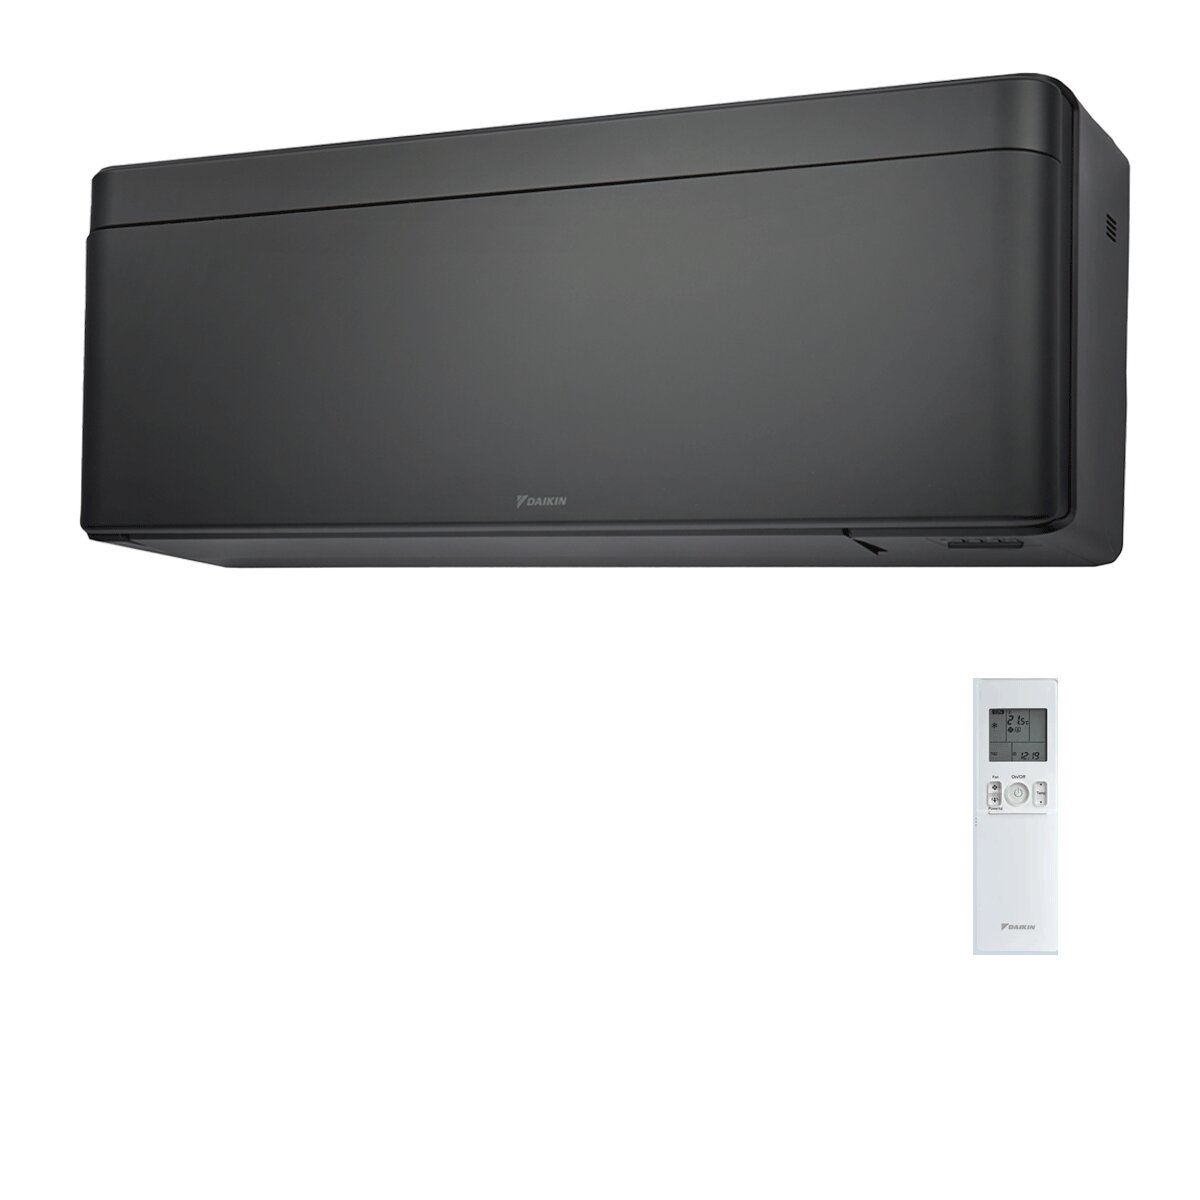 Daikin Stylish Total Black quadri split air conditioner 7000+9000+9000+18000 BTU inverter A++ wifi external unit 7.4 kW